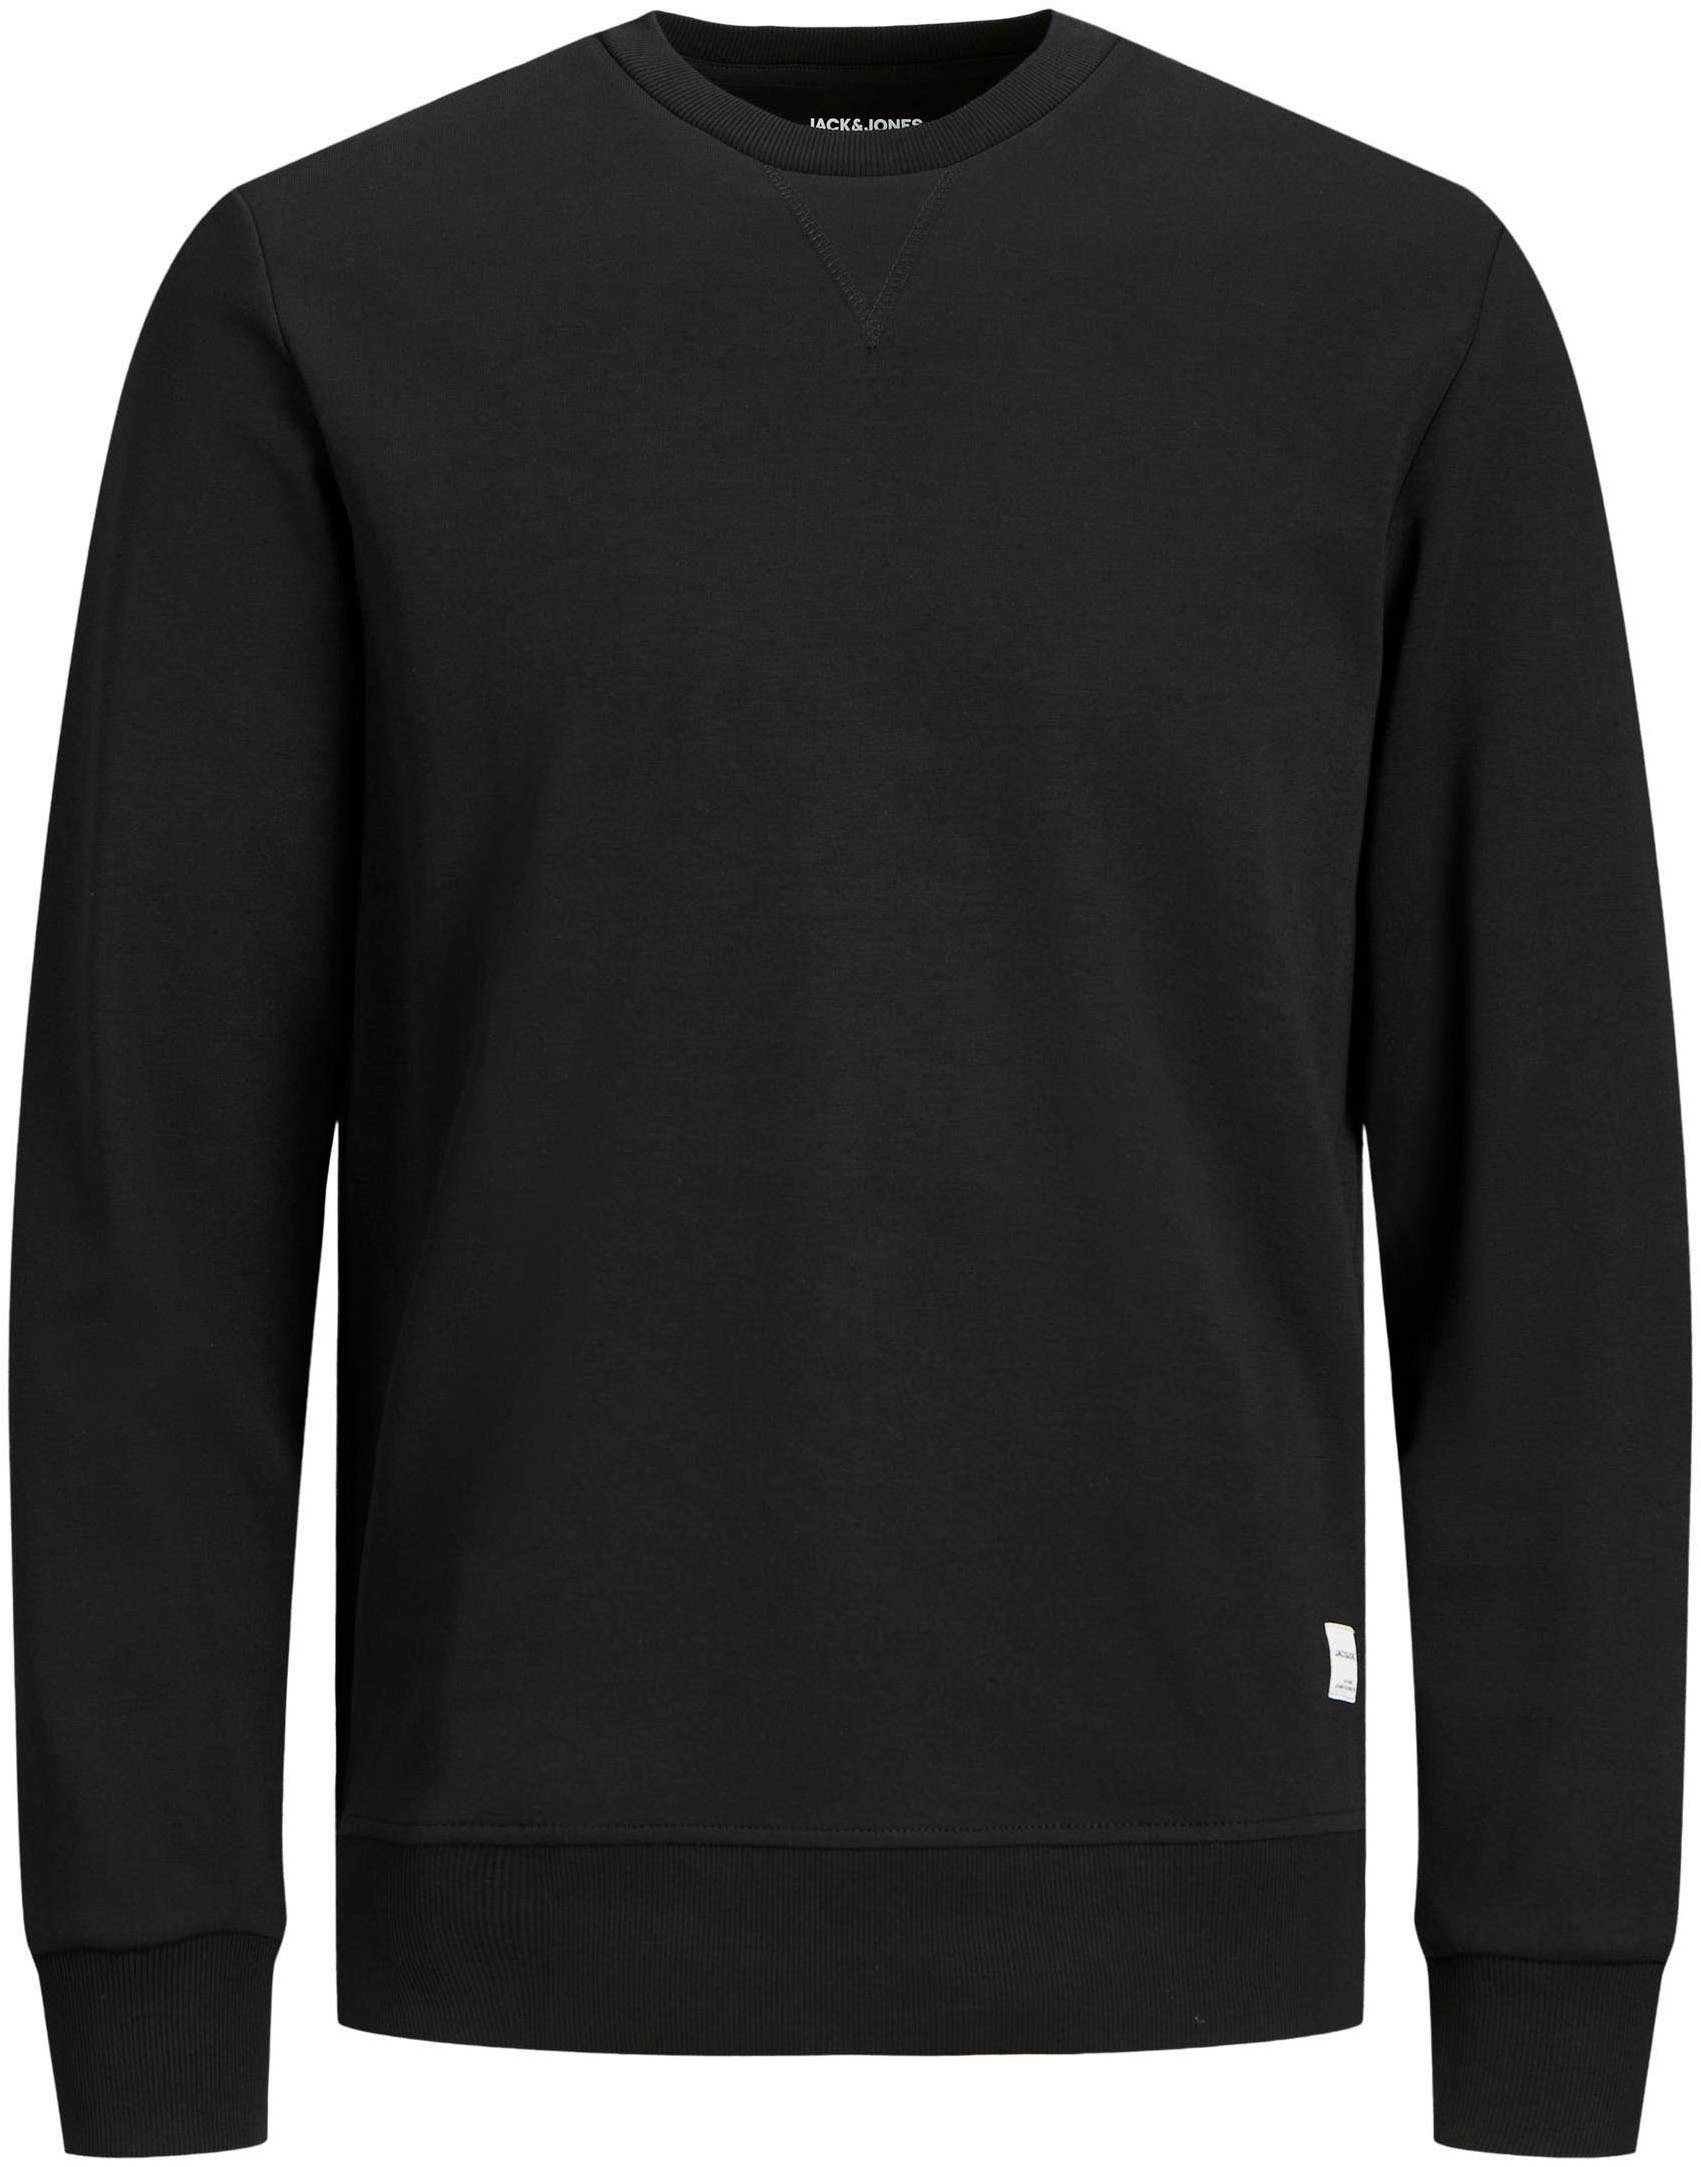 schwarz BASIC Jones Jack & Sweatshirt SWEAT